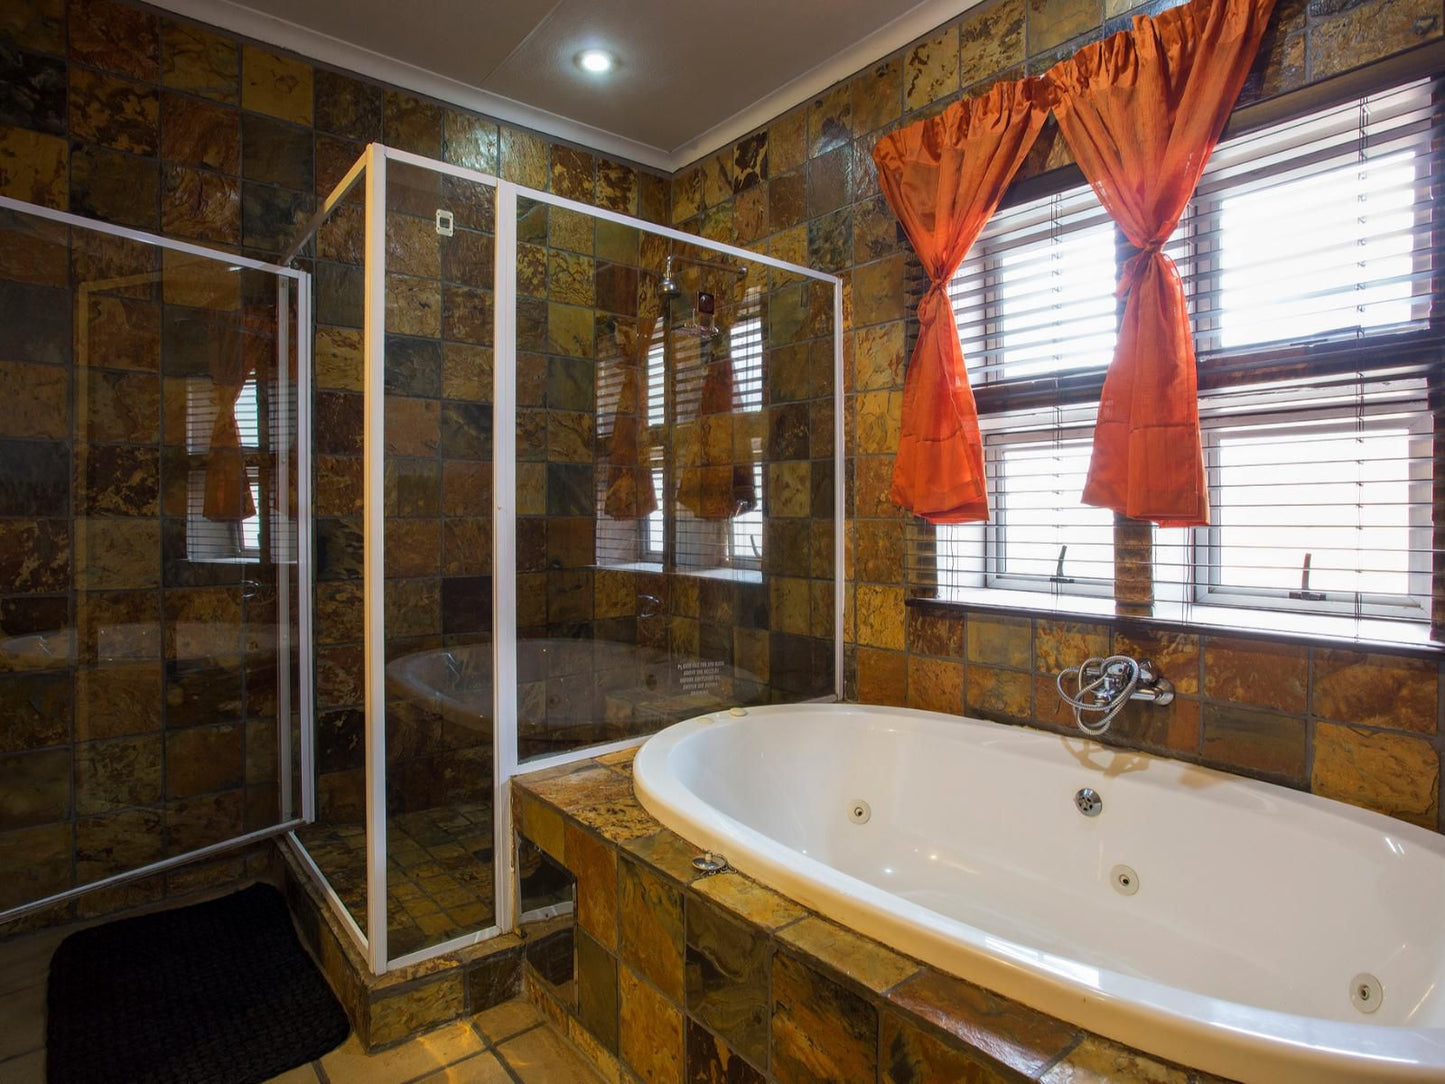 Purple Gecko Guesthouse Lydenburg Mpumalanga South Africa Bathroom